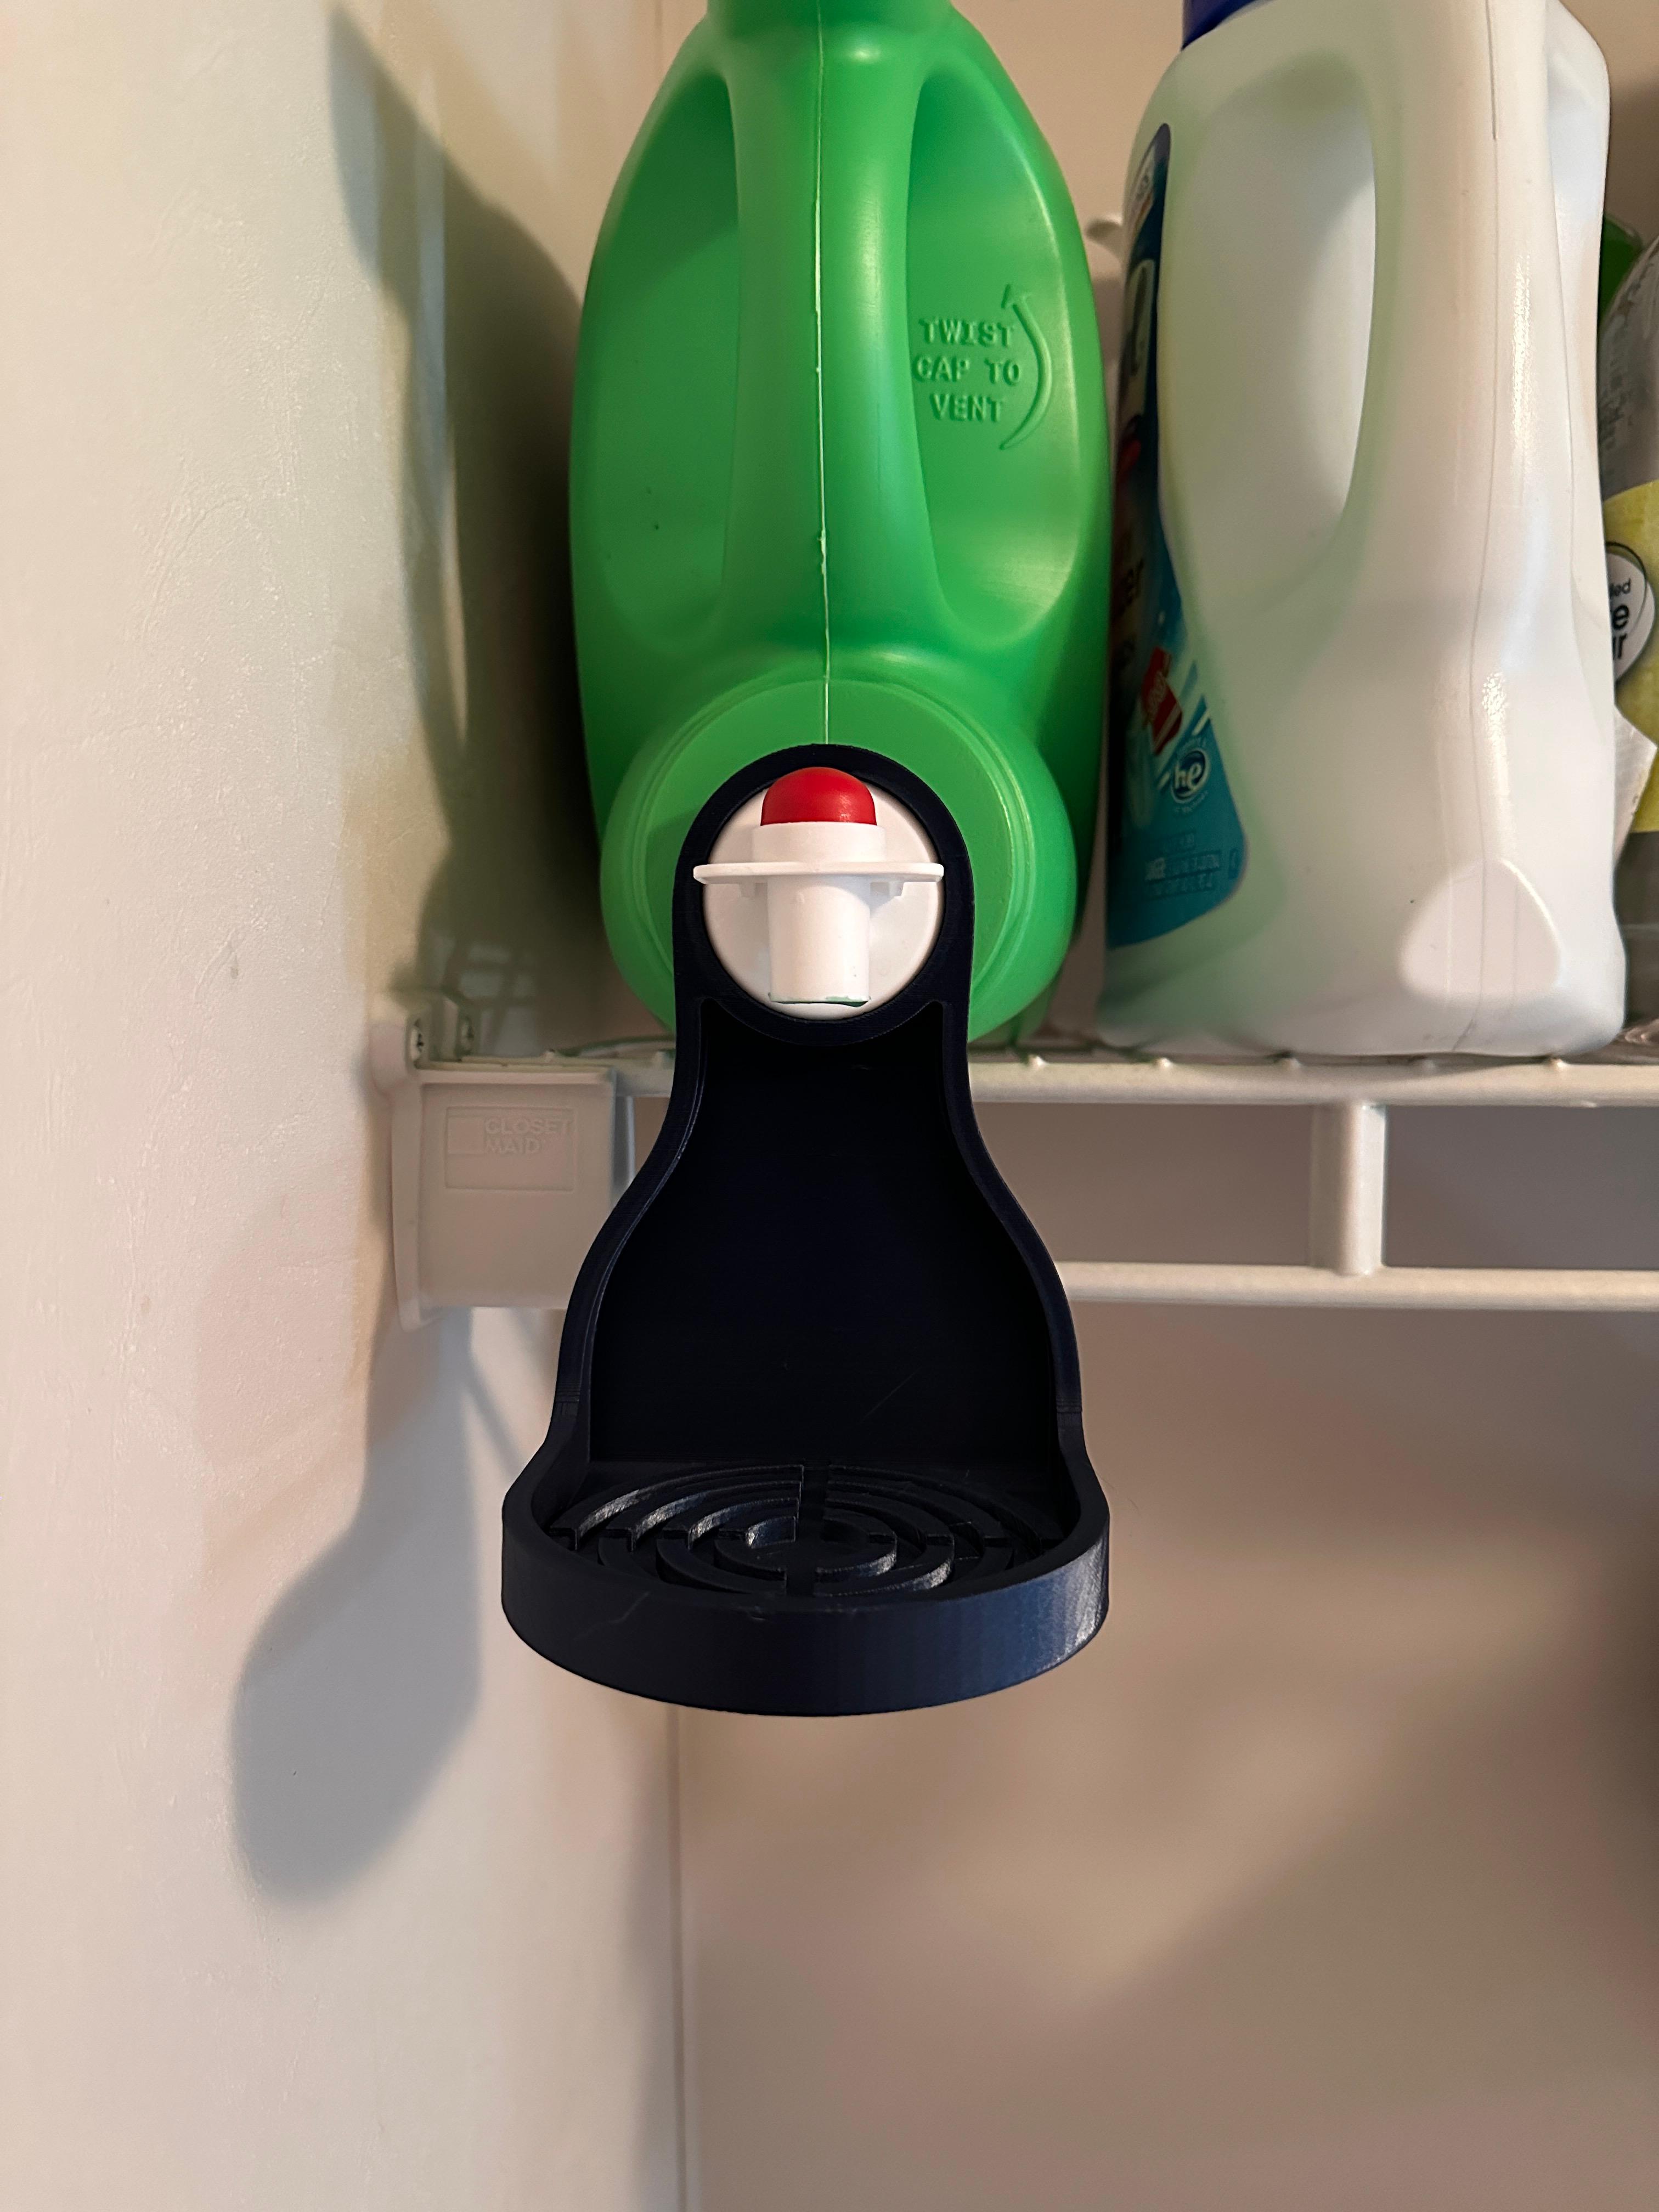 Laundry detergent cup holder 3d model